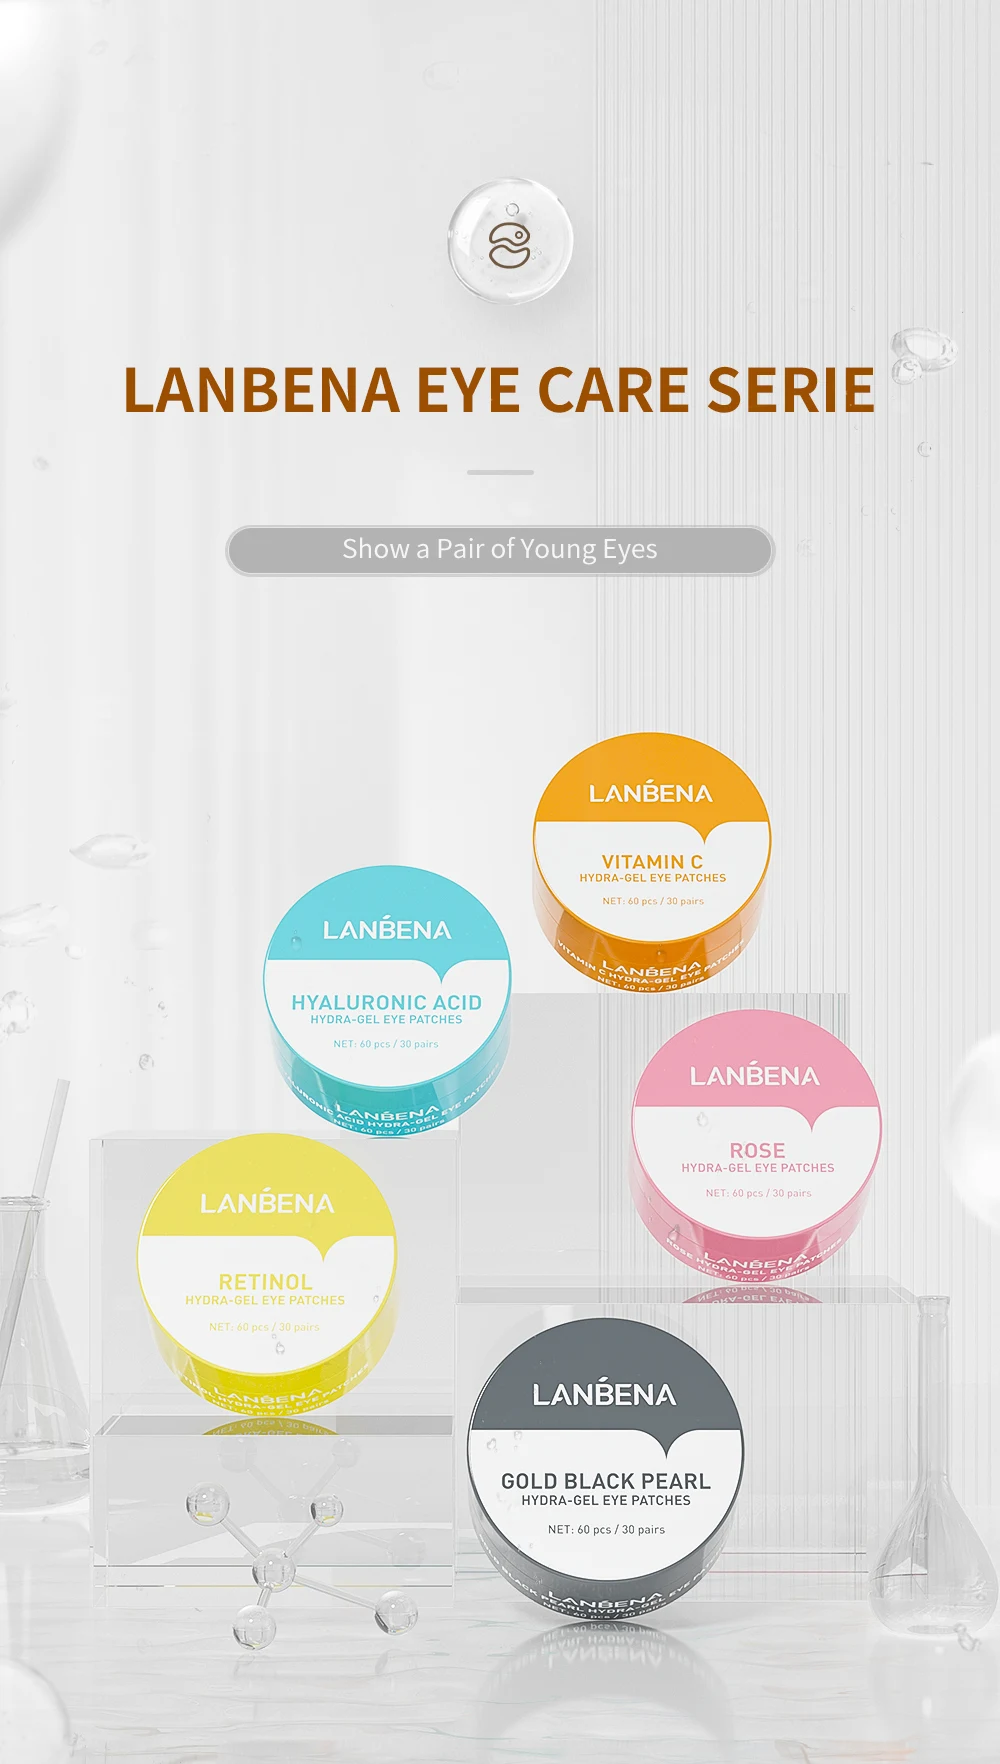 LANBENA Collagen Eye Patches 60Pcs Eye Bags Removal Wrinkles Dark Circles Patches Retinol VC Eyes Pads Sleep Face Mask Skin Care